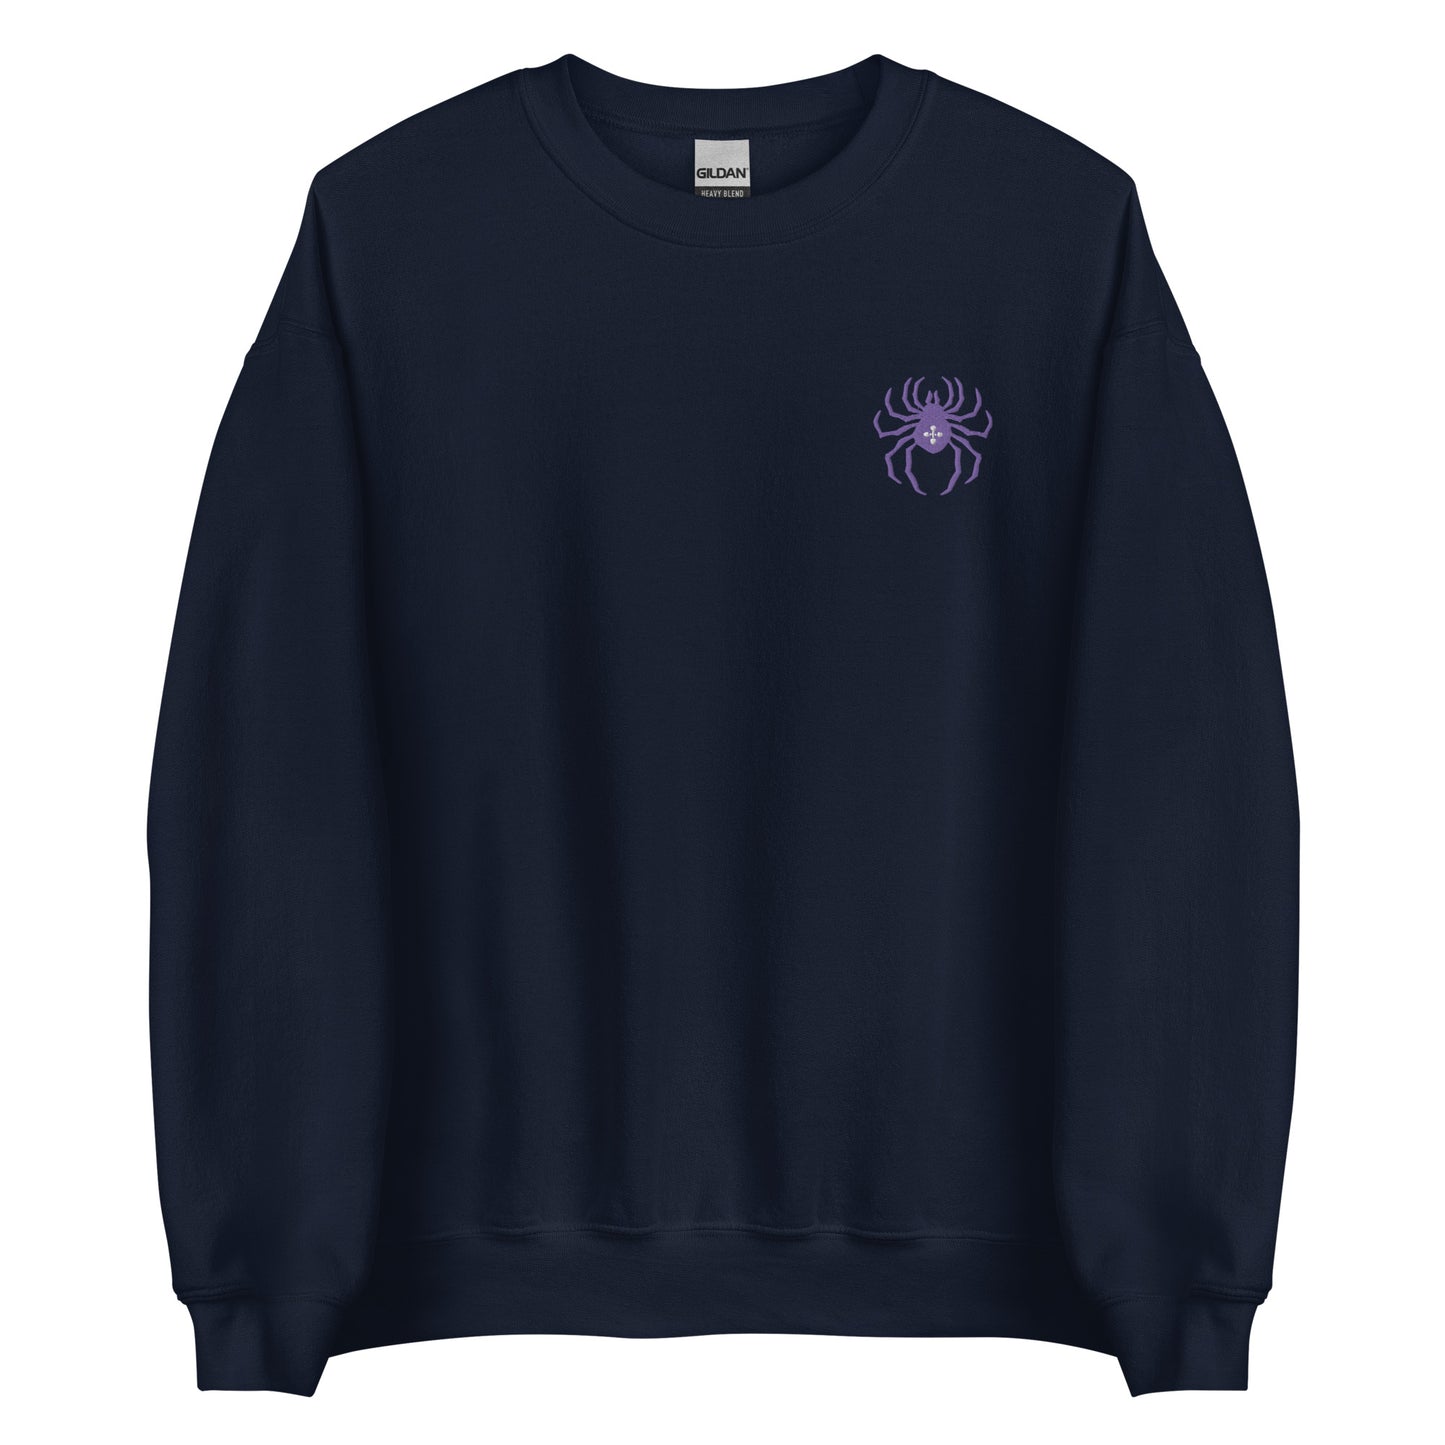 Phantom Spider Troop Sweatshirt Embroidered